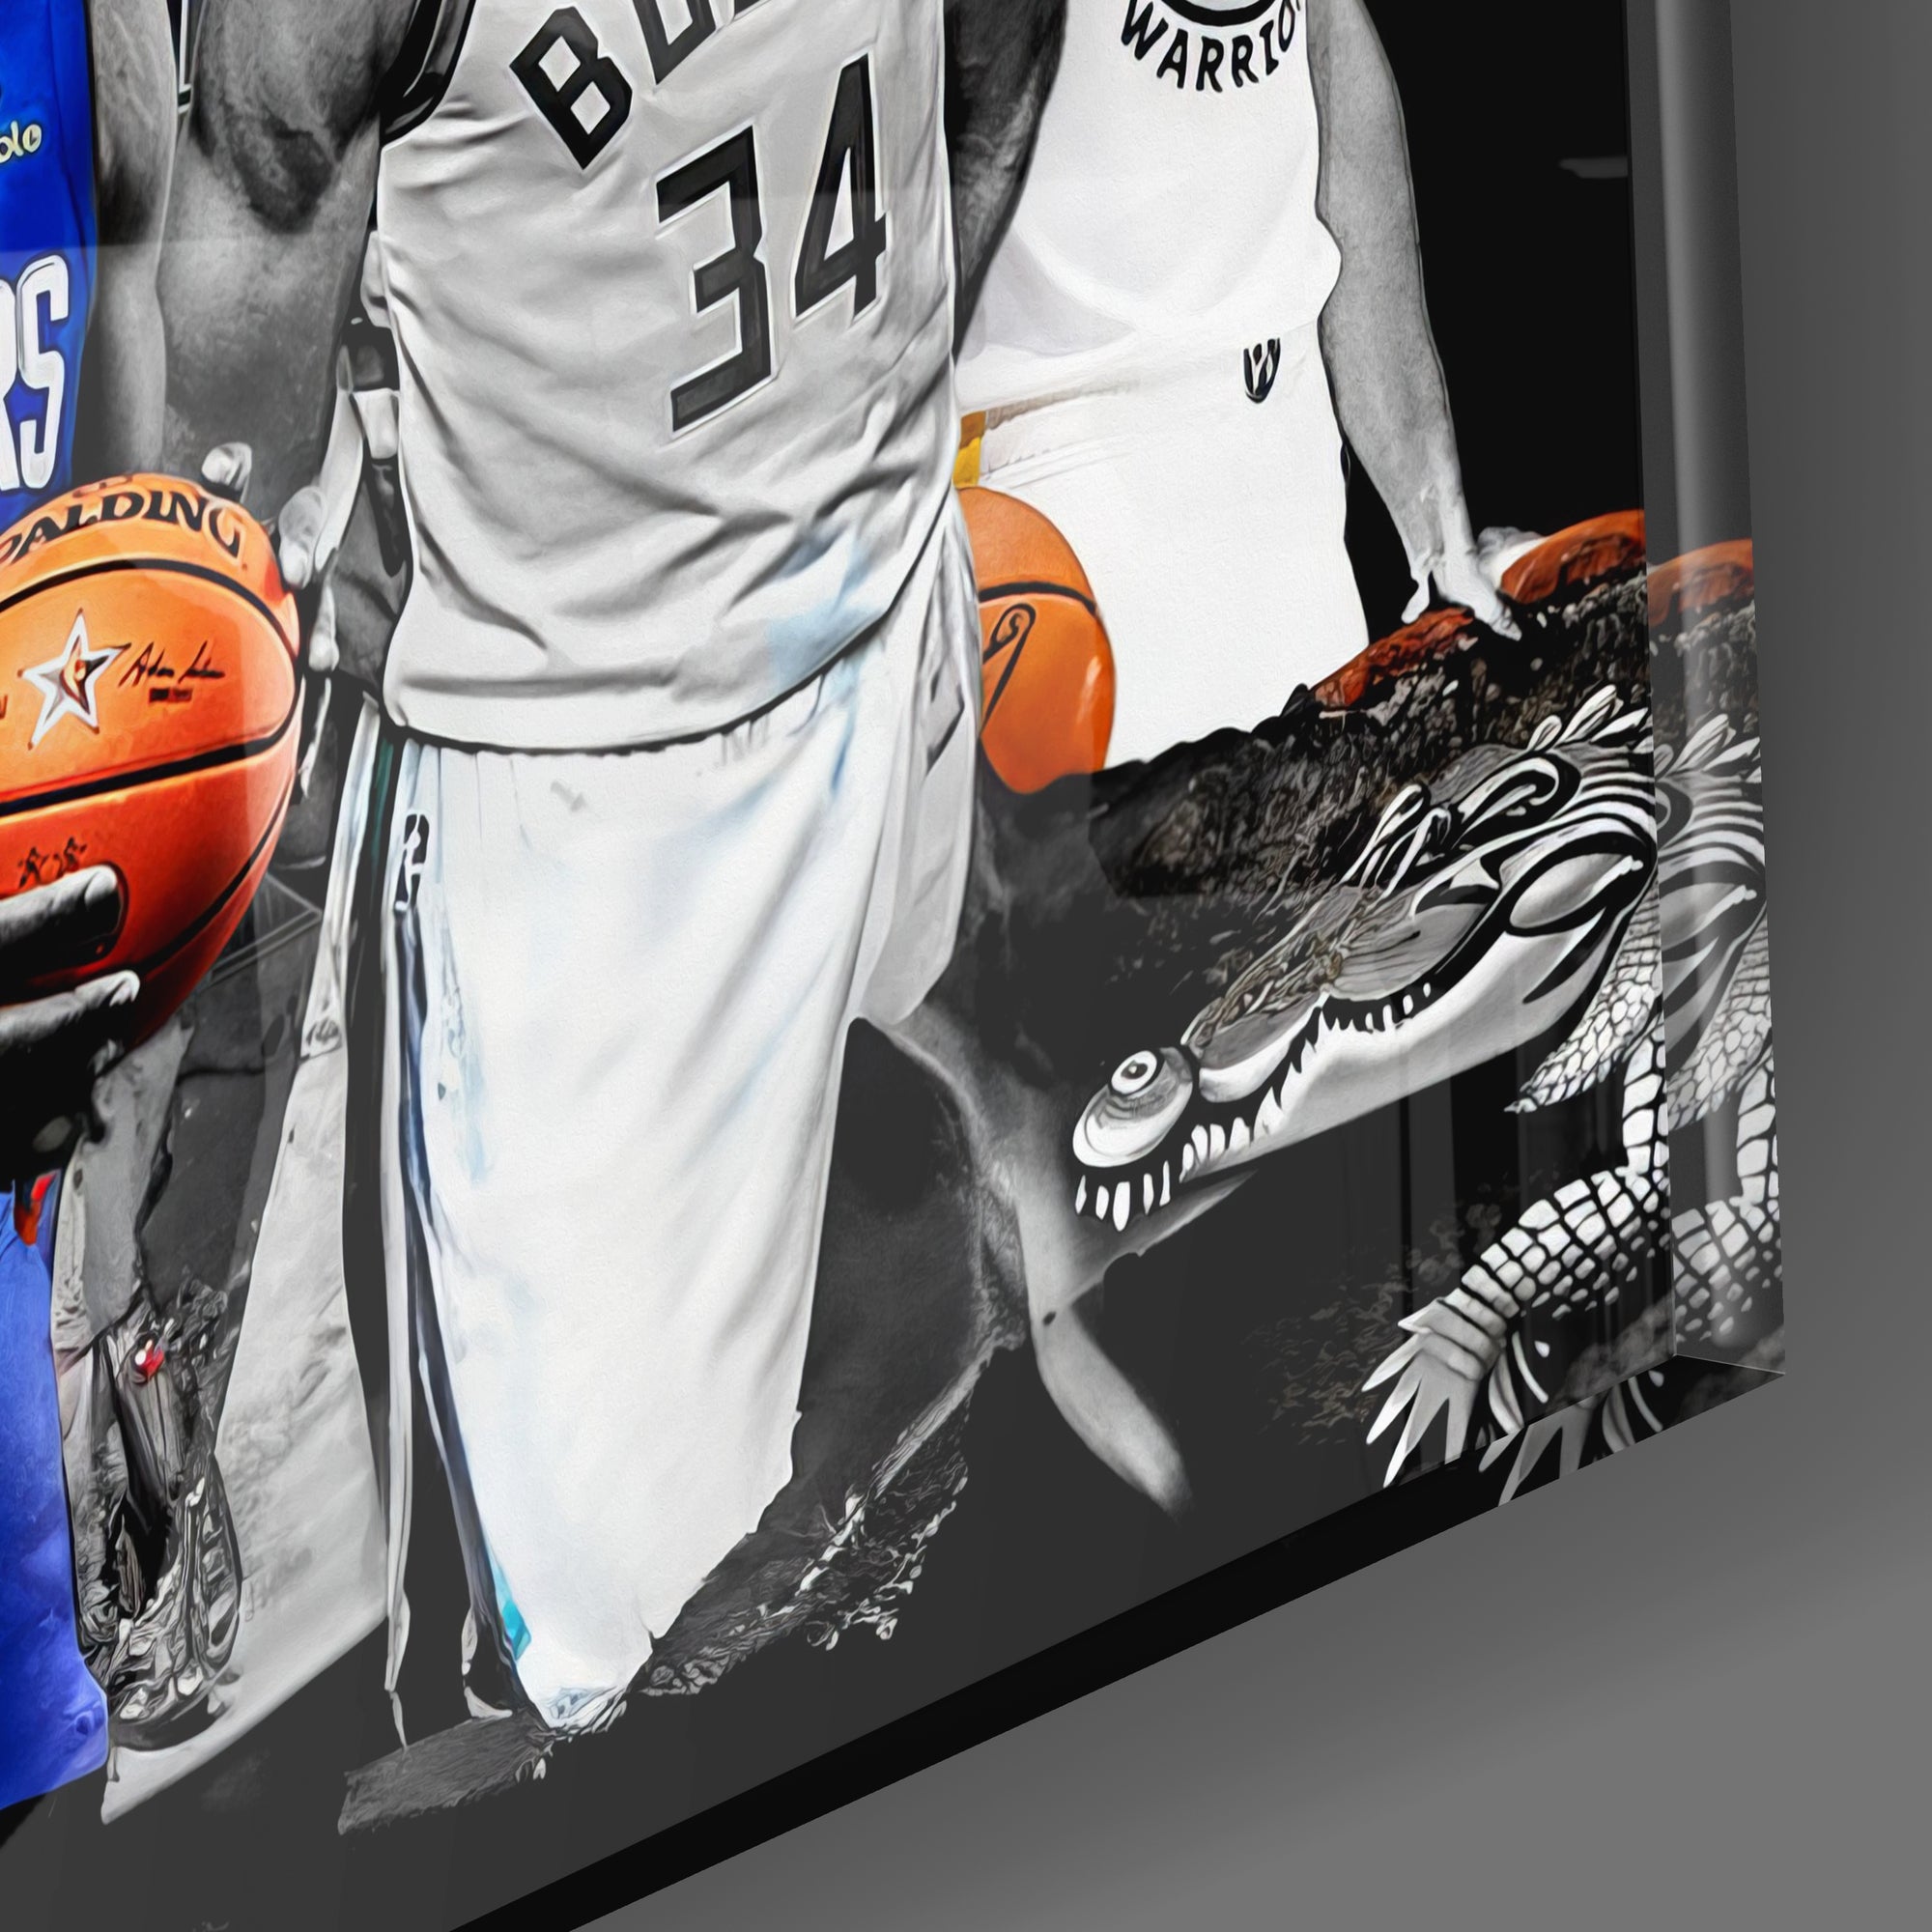 NBA All Star Glass Wall Art || Designer Collection